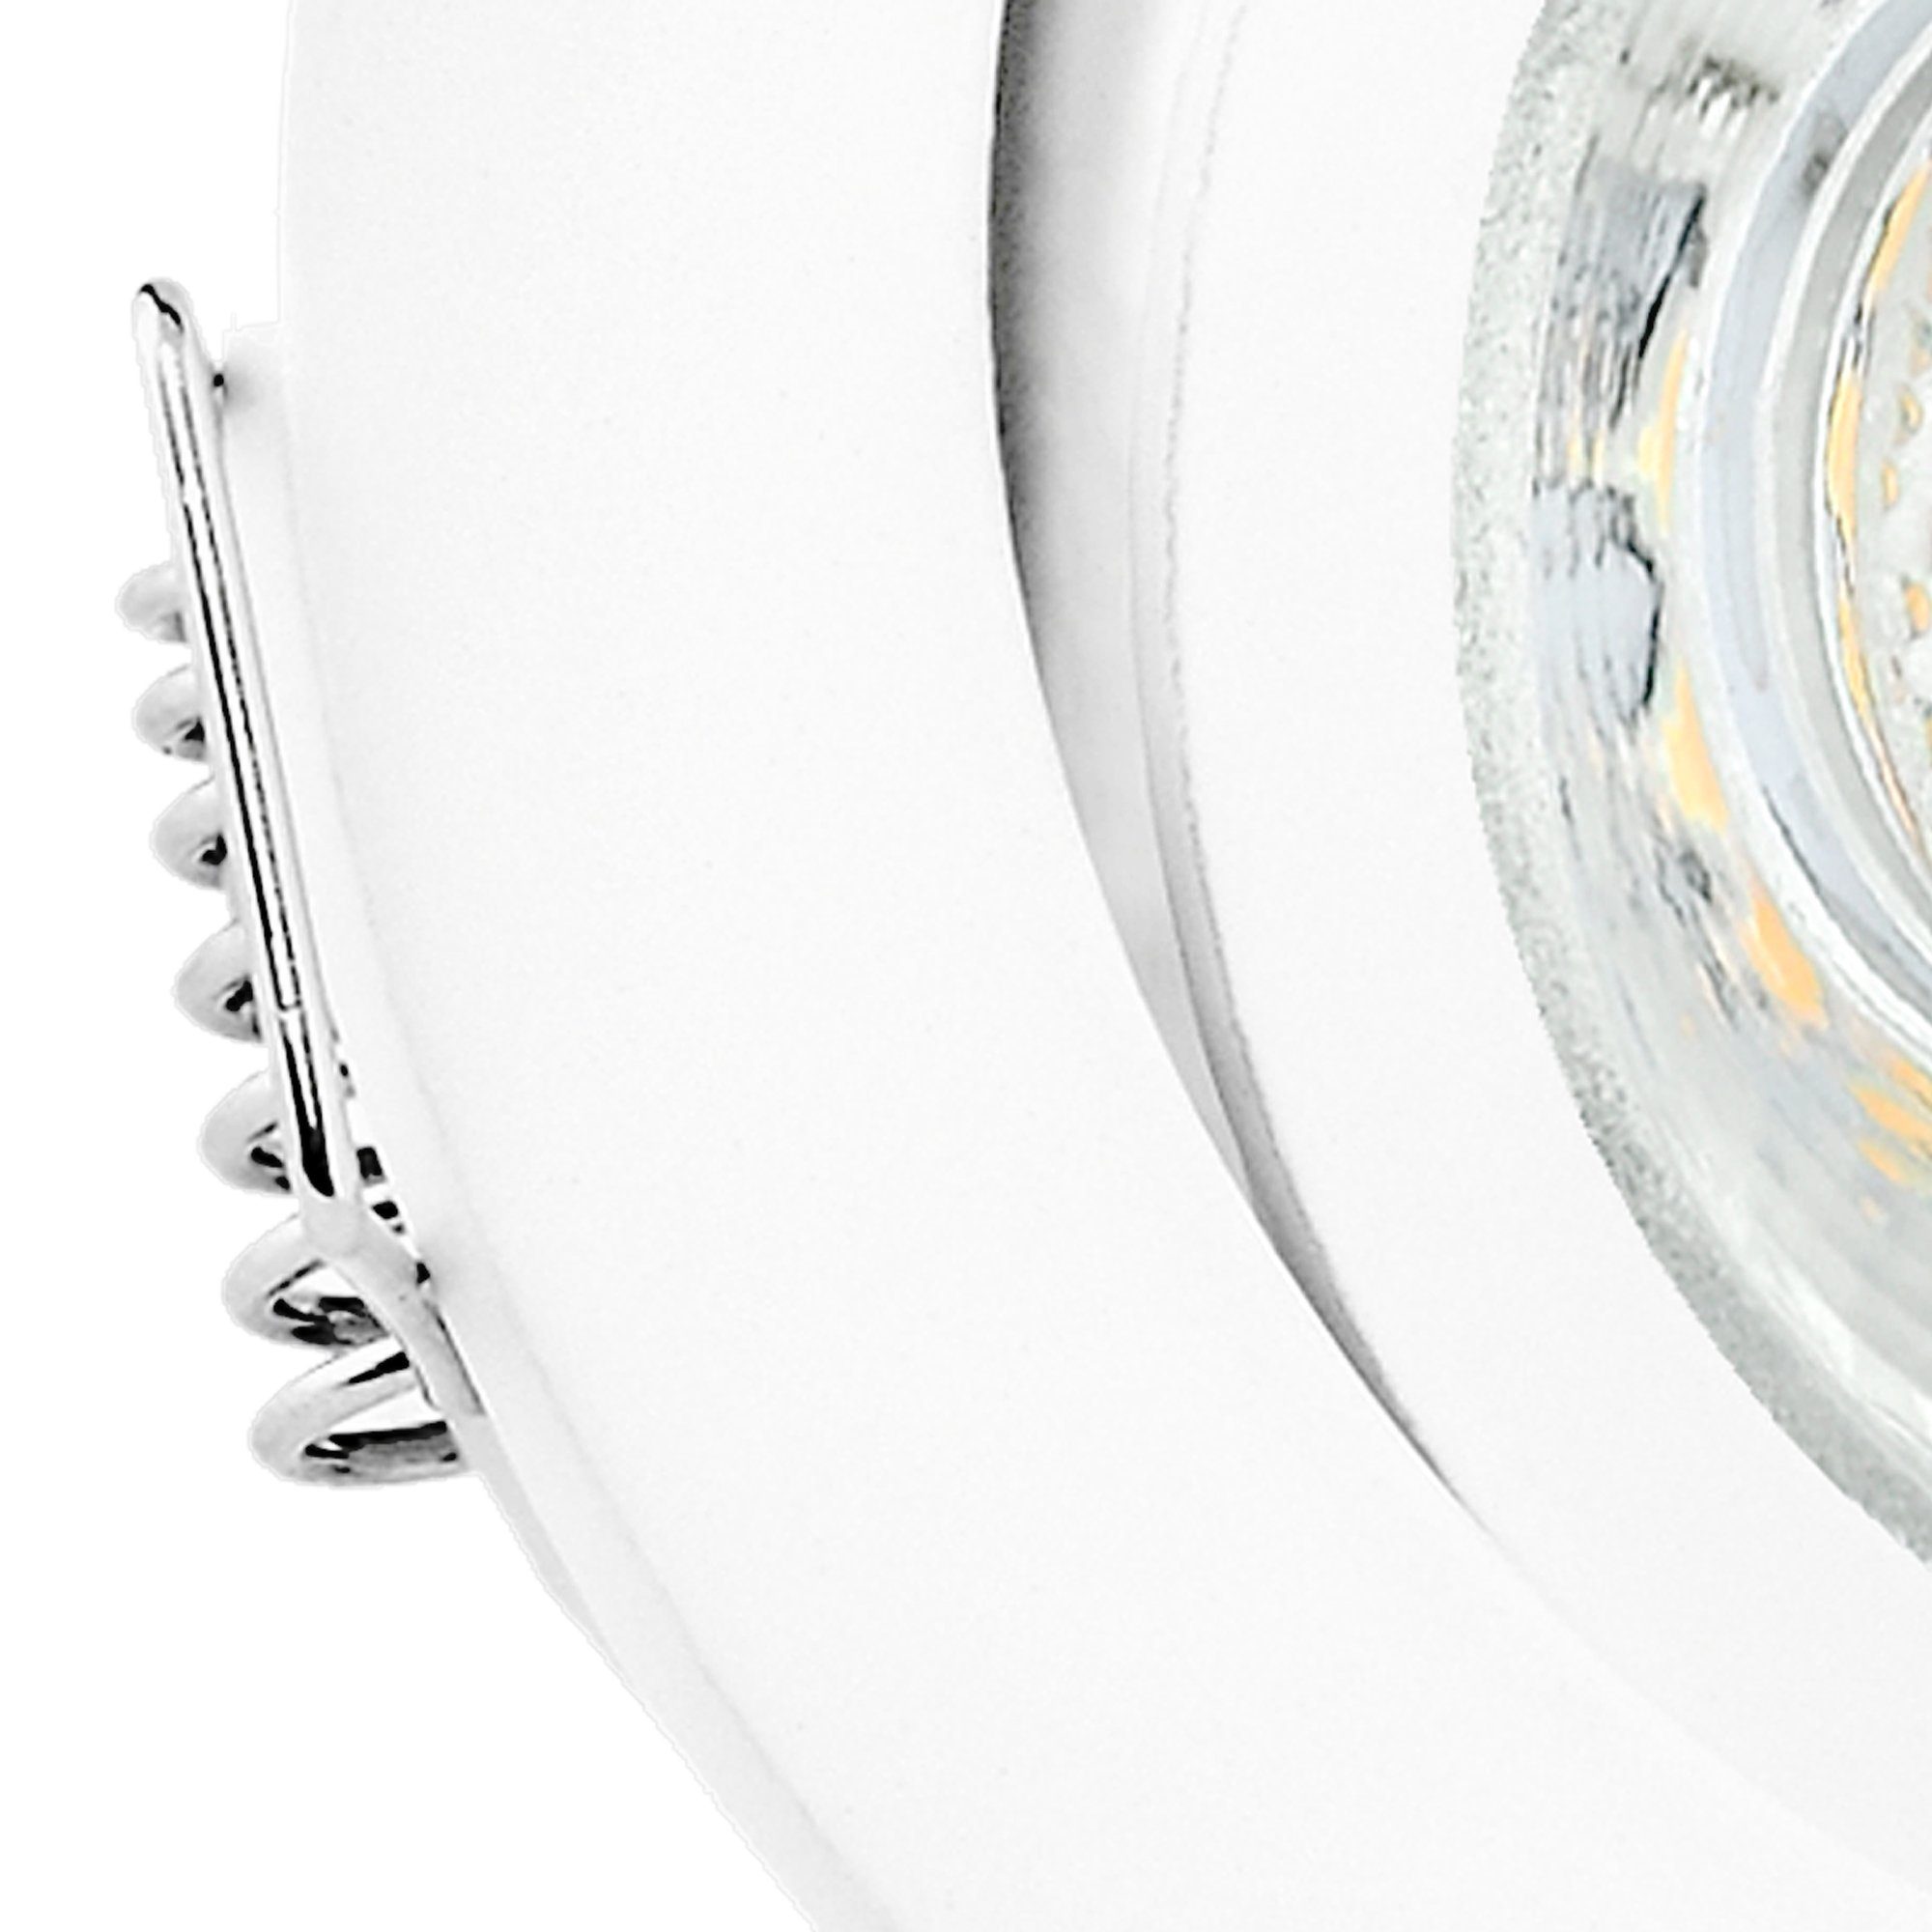 weiss LED x Leuchtmittel Spot Leuchtmittel GU10, linovum Einbaustrahler inkl. LED 10 rund inklusive schwenkbar inklusive, Einbaustrahler LED